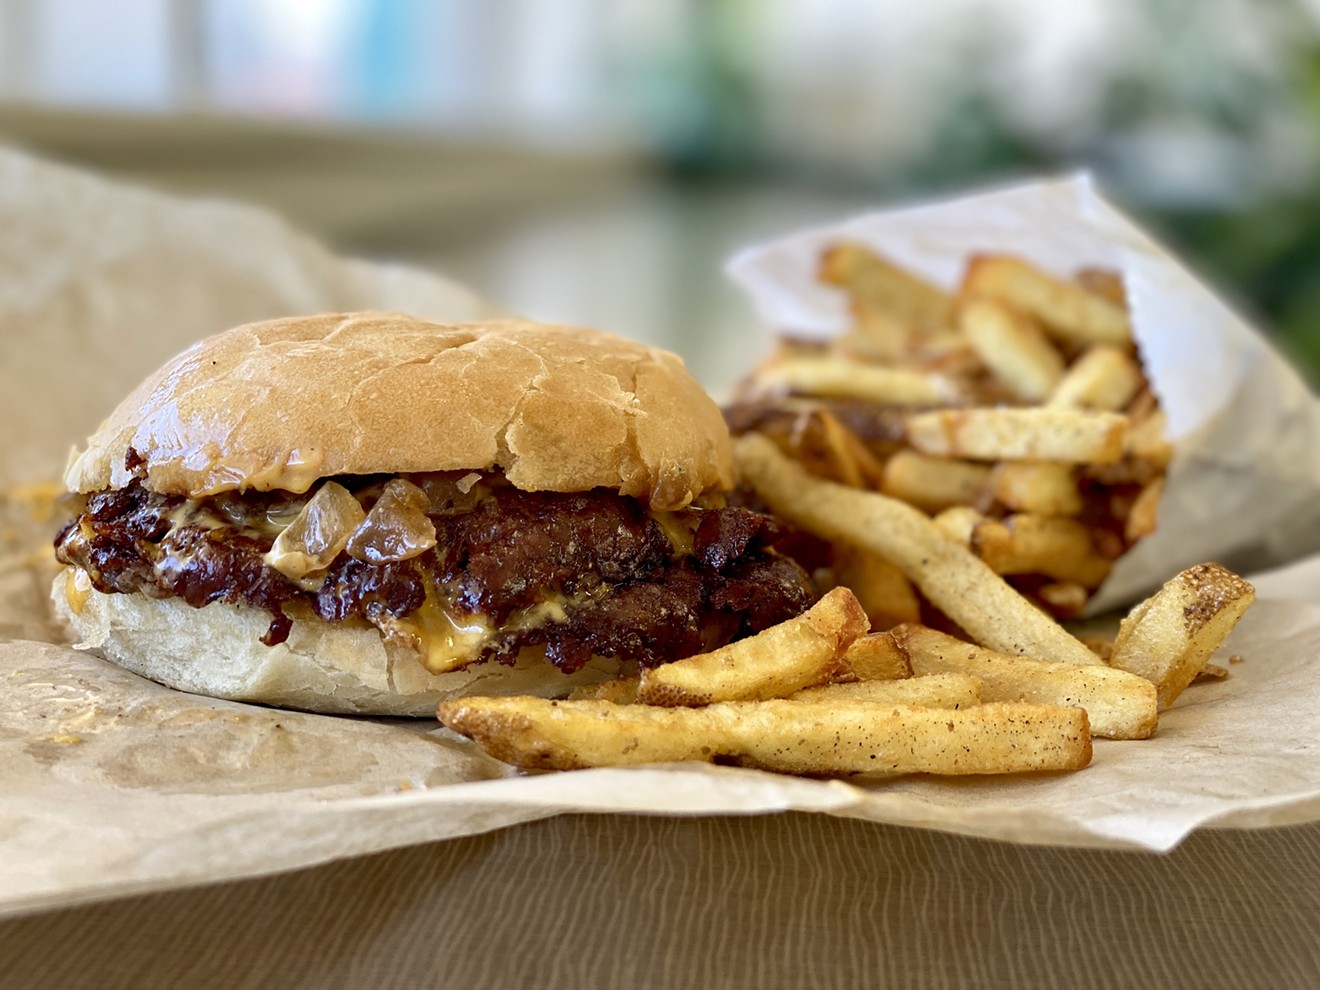 When visiting Prescott, stop by standout restaurants including Sammies Burger Joint.